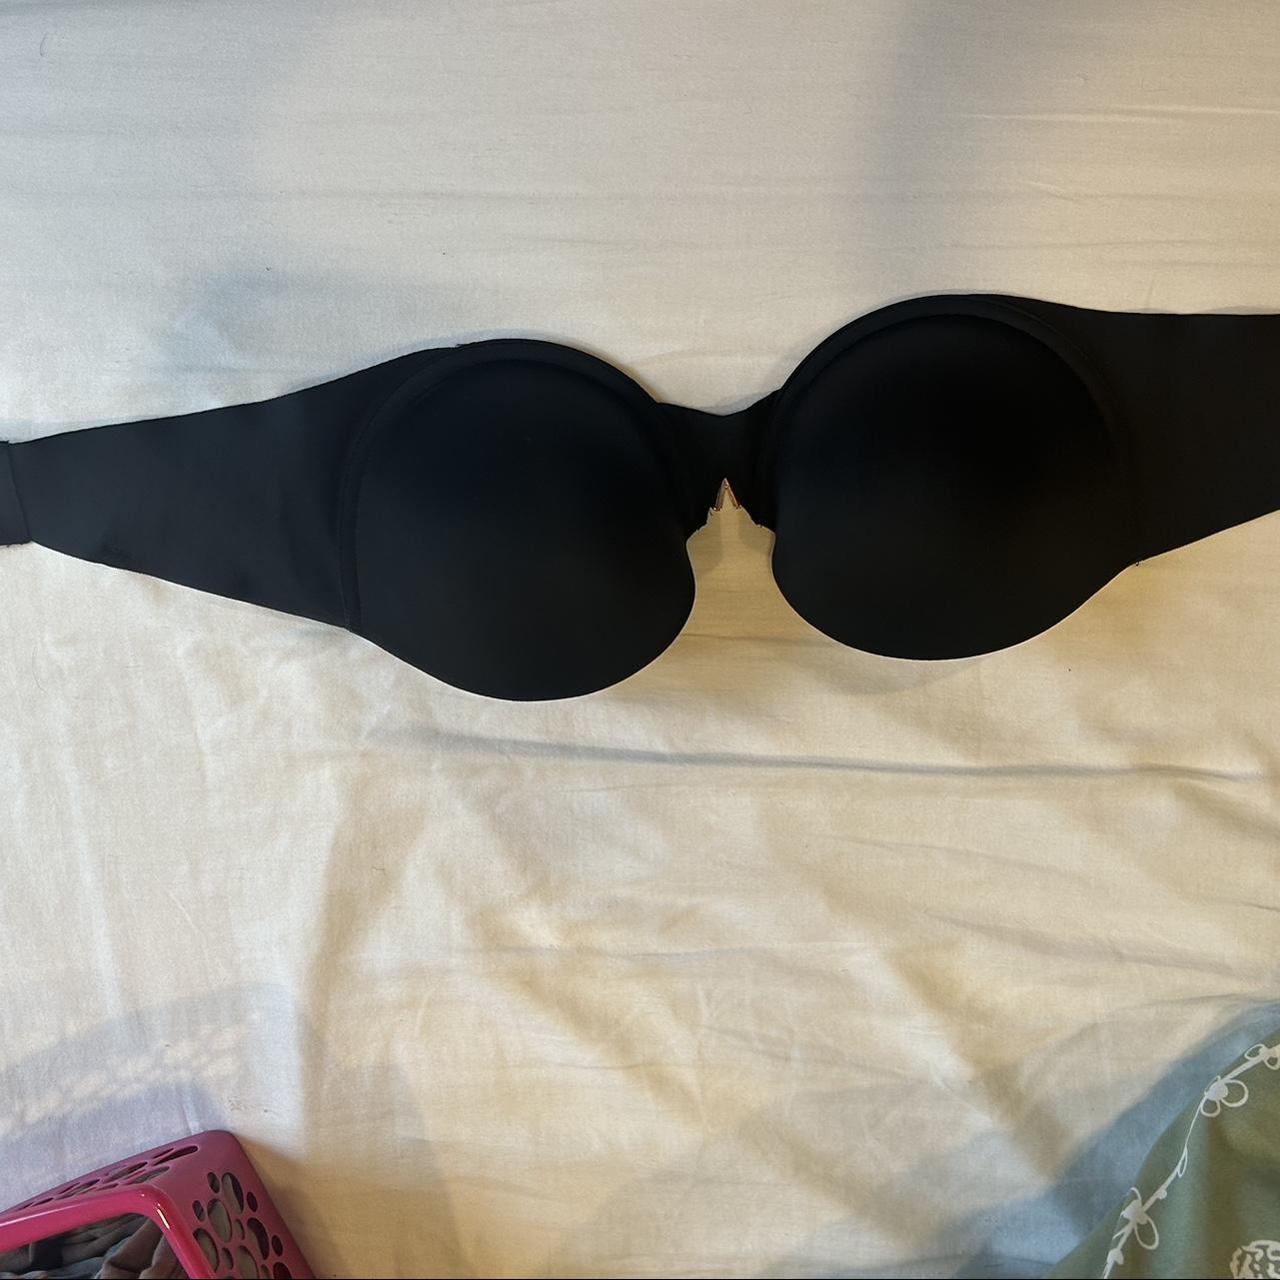 Victoria Secret Strapless Push Up Bra 36D Nude Black - Depop